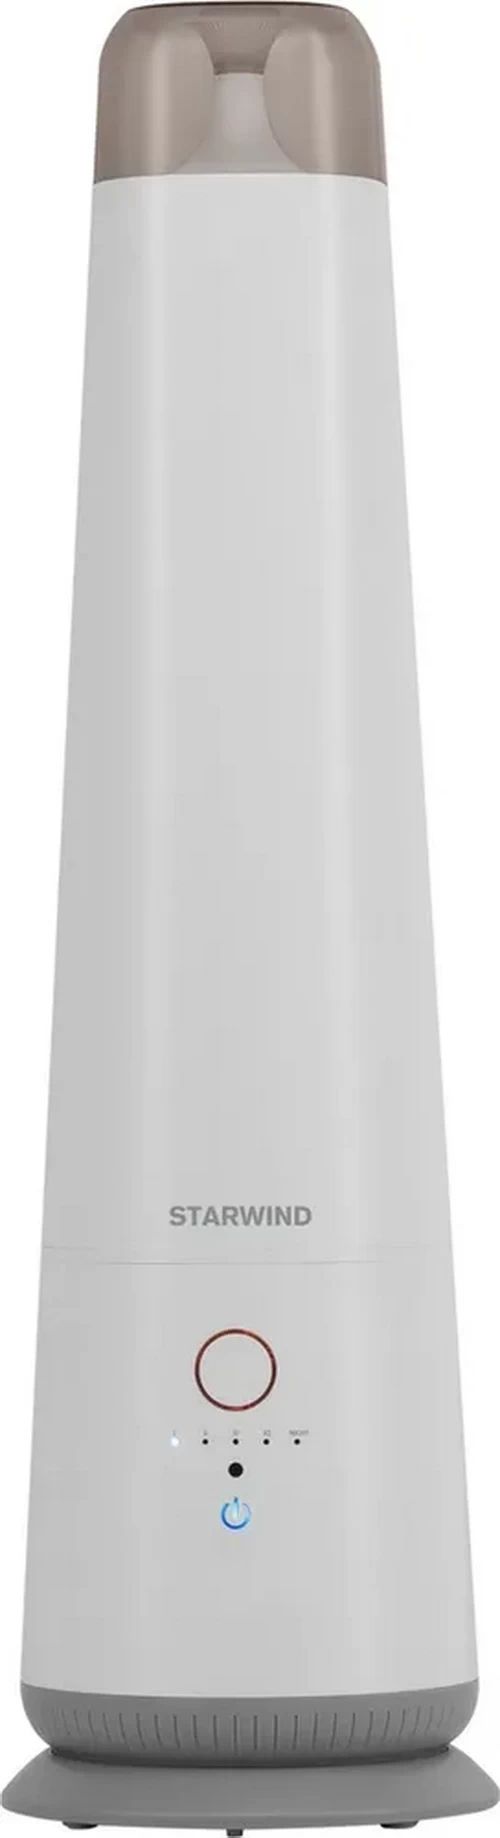 Воздухоувлажнитель STARWIND SHC1550 белый воздухоувлажнитель starwind shc1550 белый